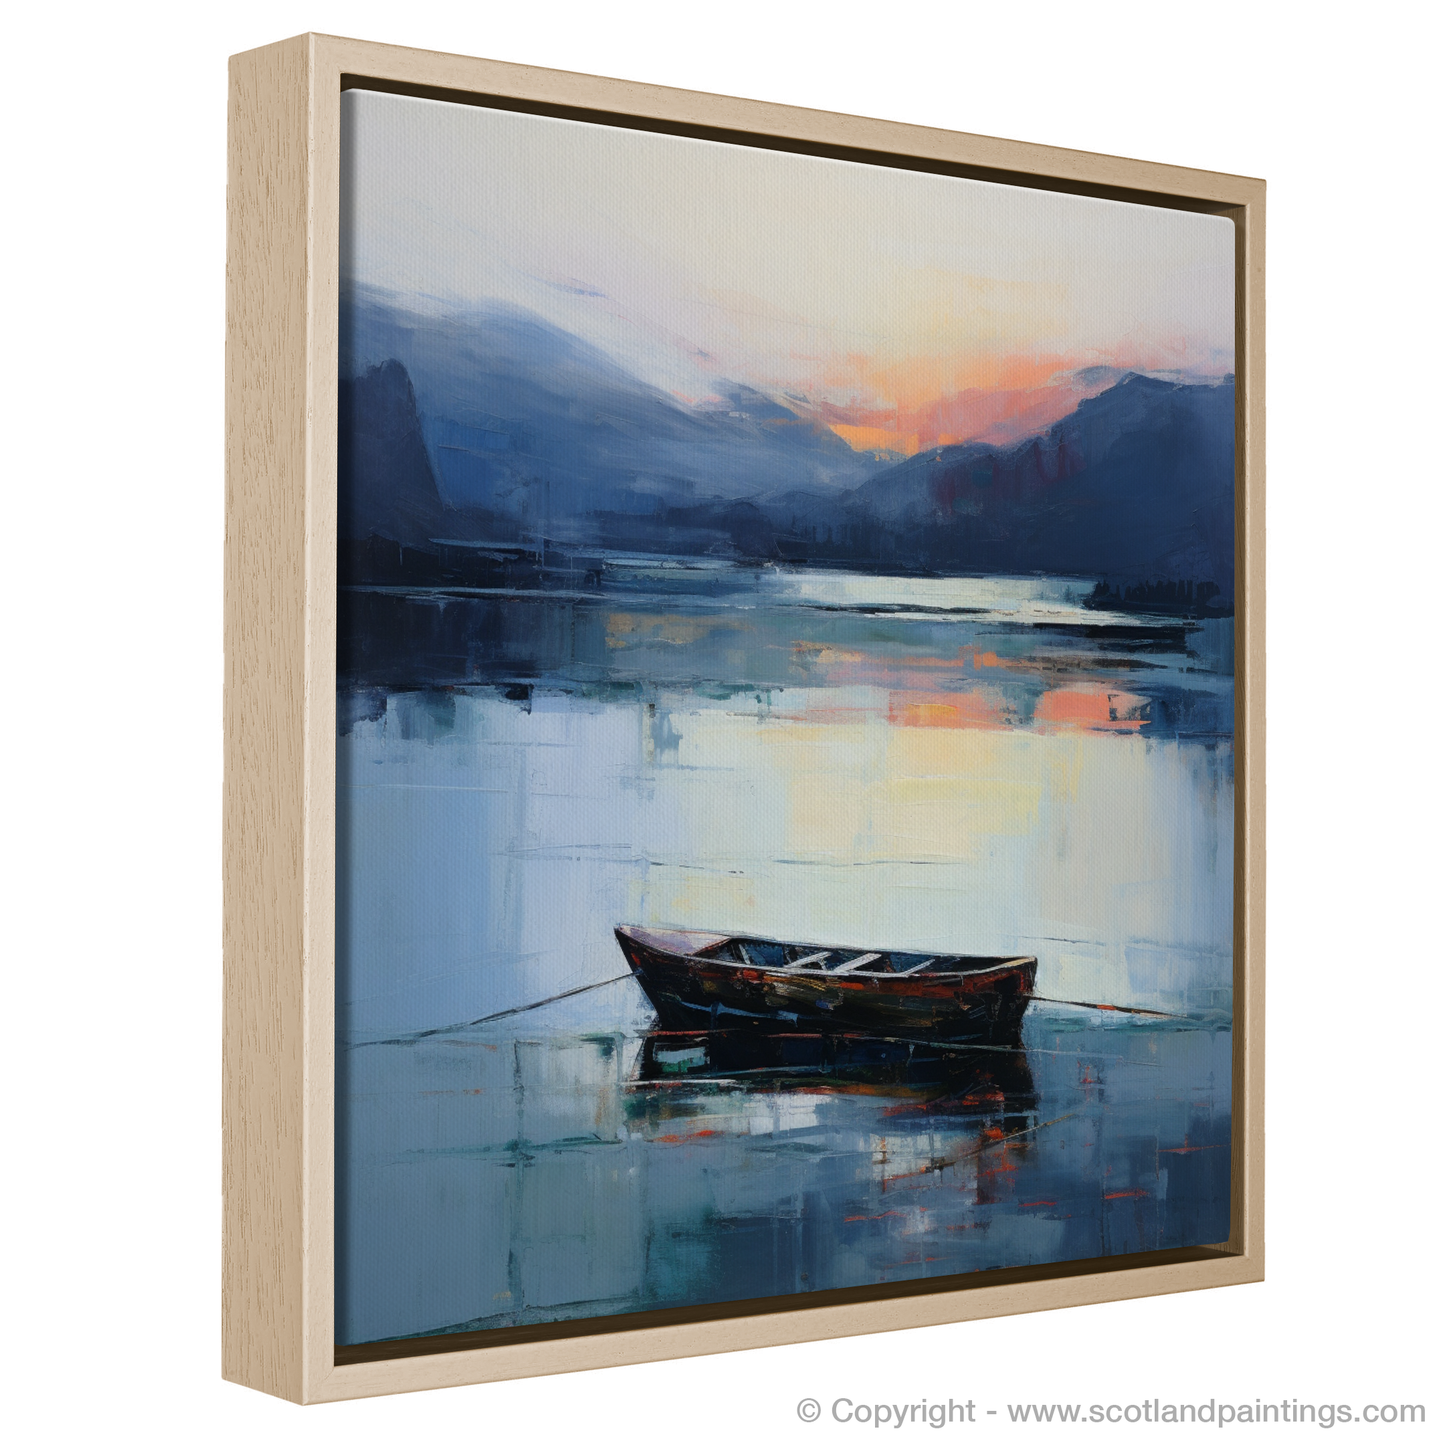 Painting and Art Print of Lone rowboat on Loch Lomond at dusk entitled "Dusk Serenade at Loch Lomond".